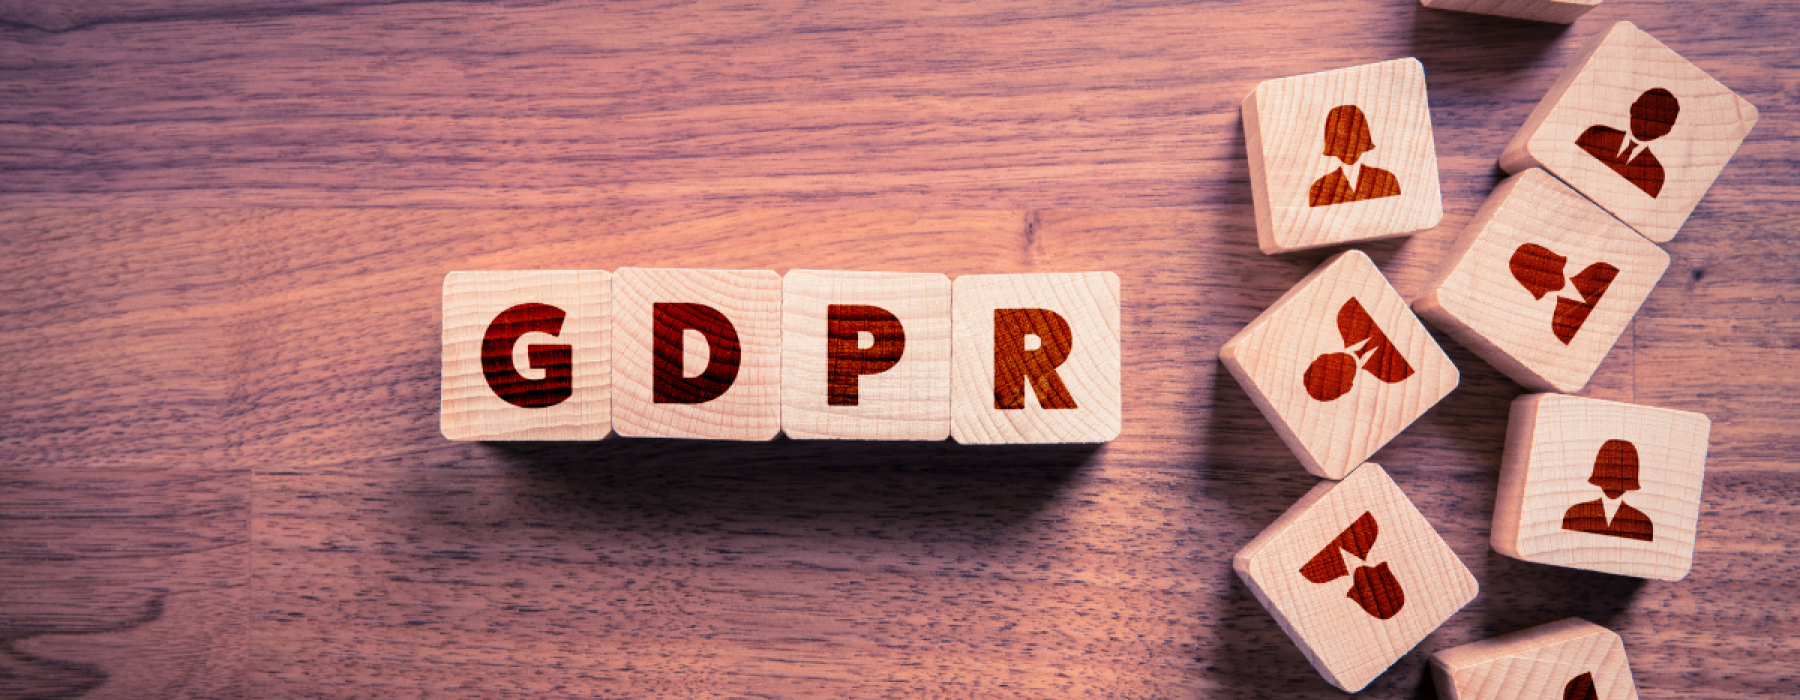 GDPR General Data Protection Regulation (1200 × 800 px)